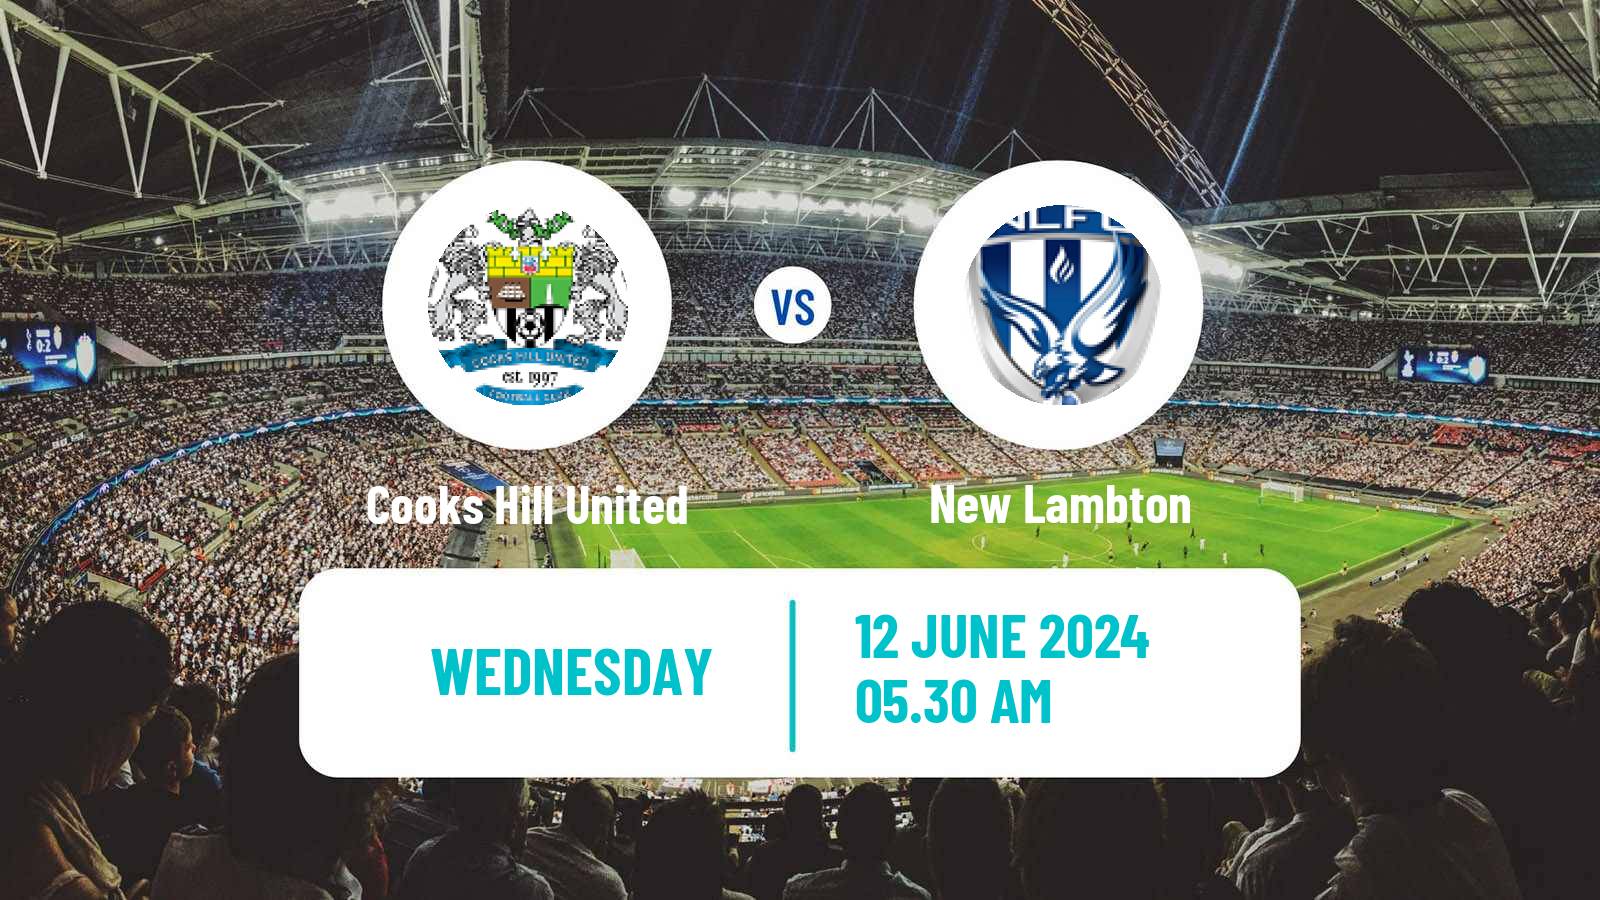 Soccer Australian NPL Northern NSW Cooks Hill United - New Lambton